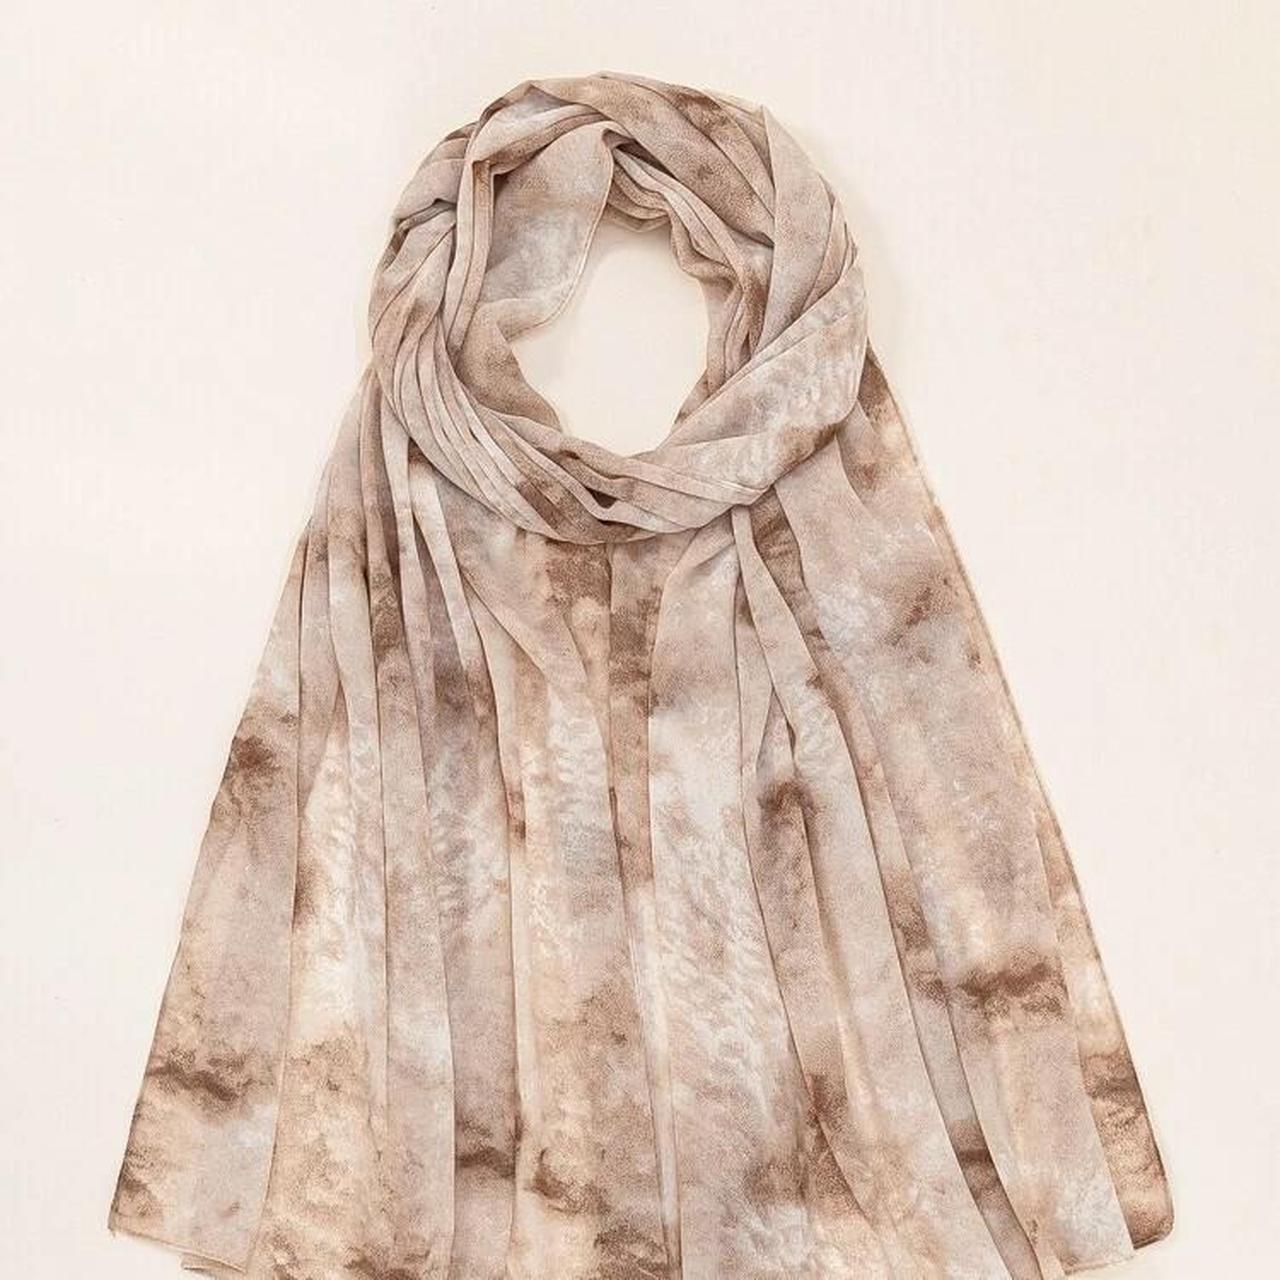 Product Image 1 - Tie dye chiffon scarf
Beige brown